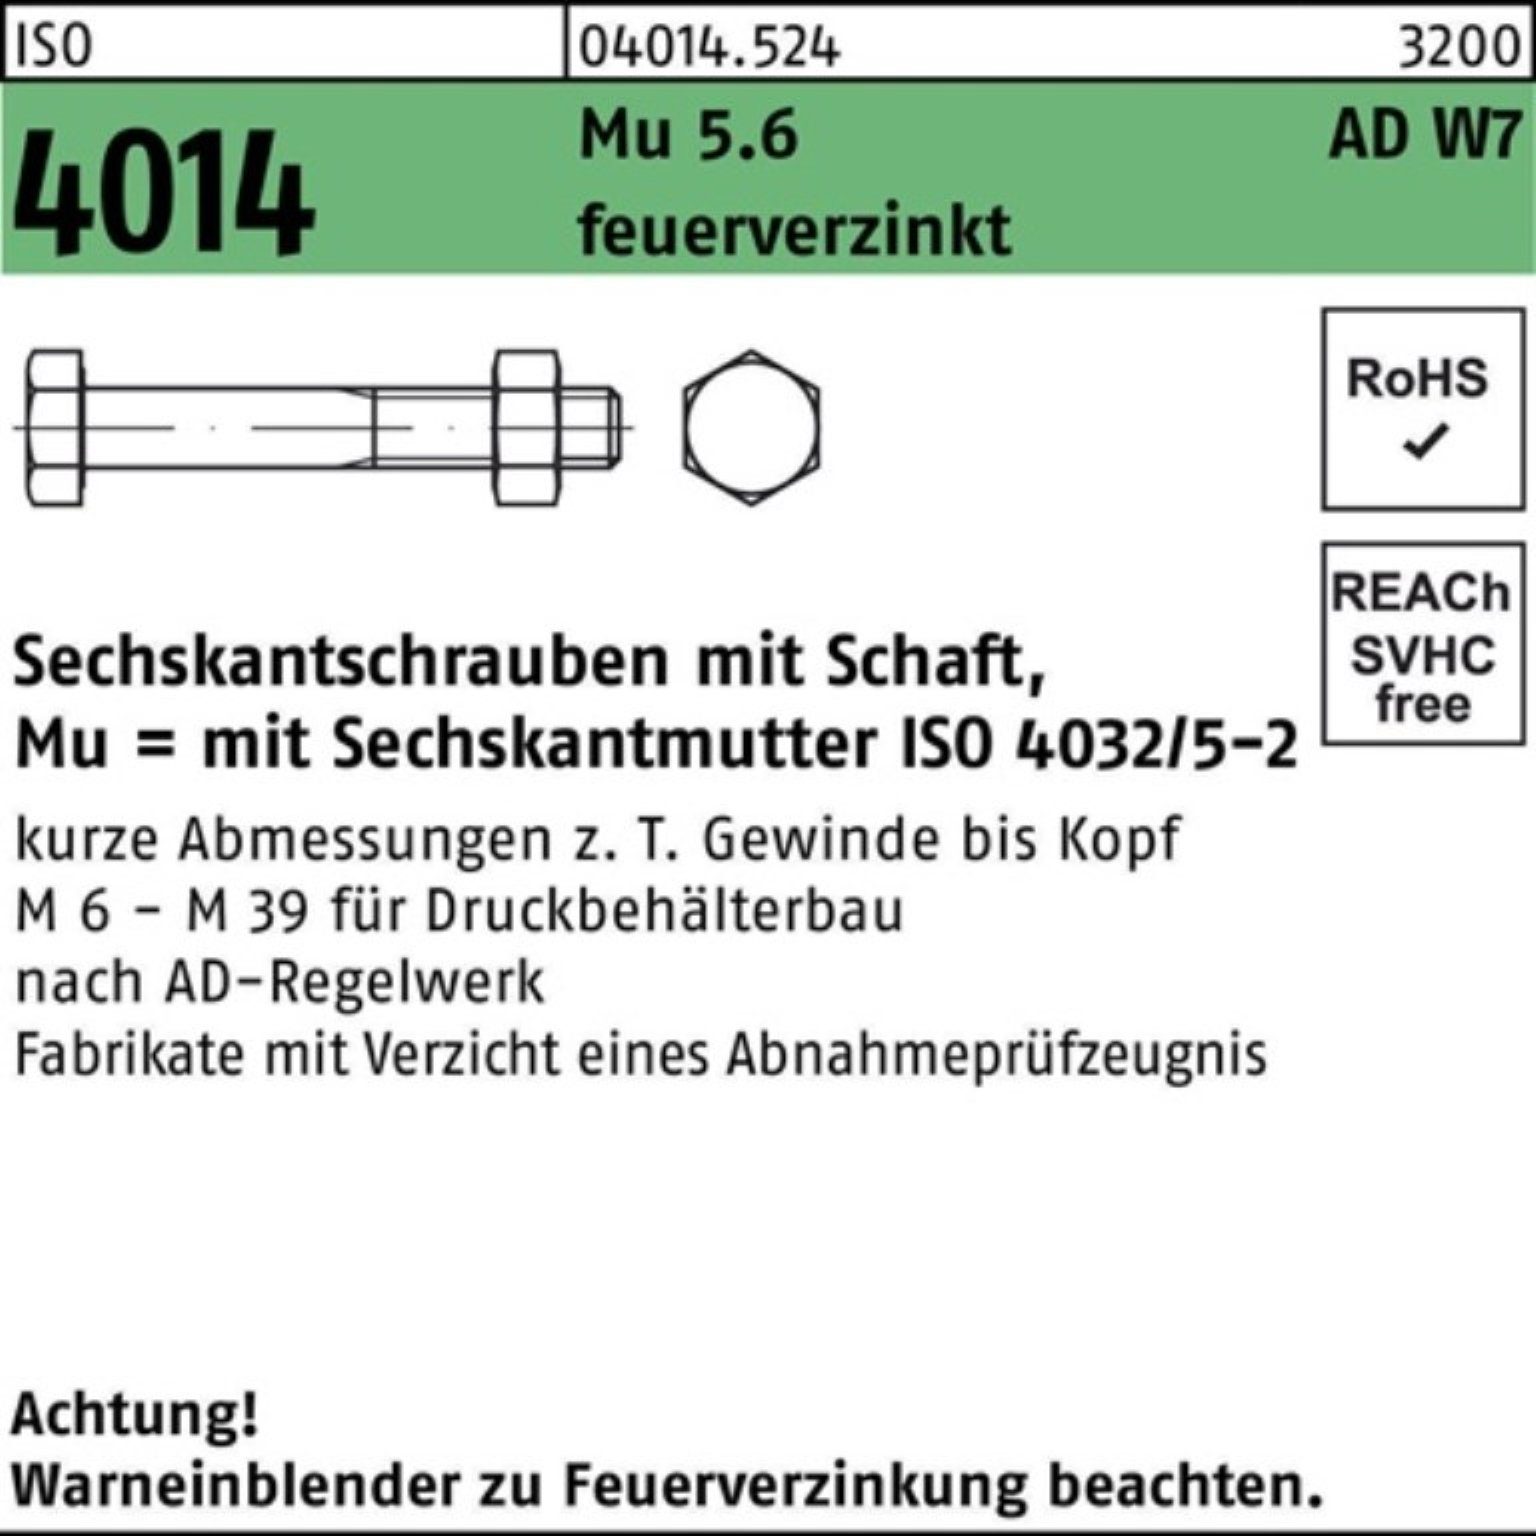 Bufab Sechskantschraube 100er Pack Schaft Mu 5.6 110 4014 M24x Sechskantschraube ISO feuerv W7